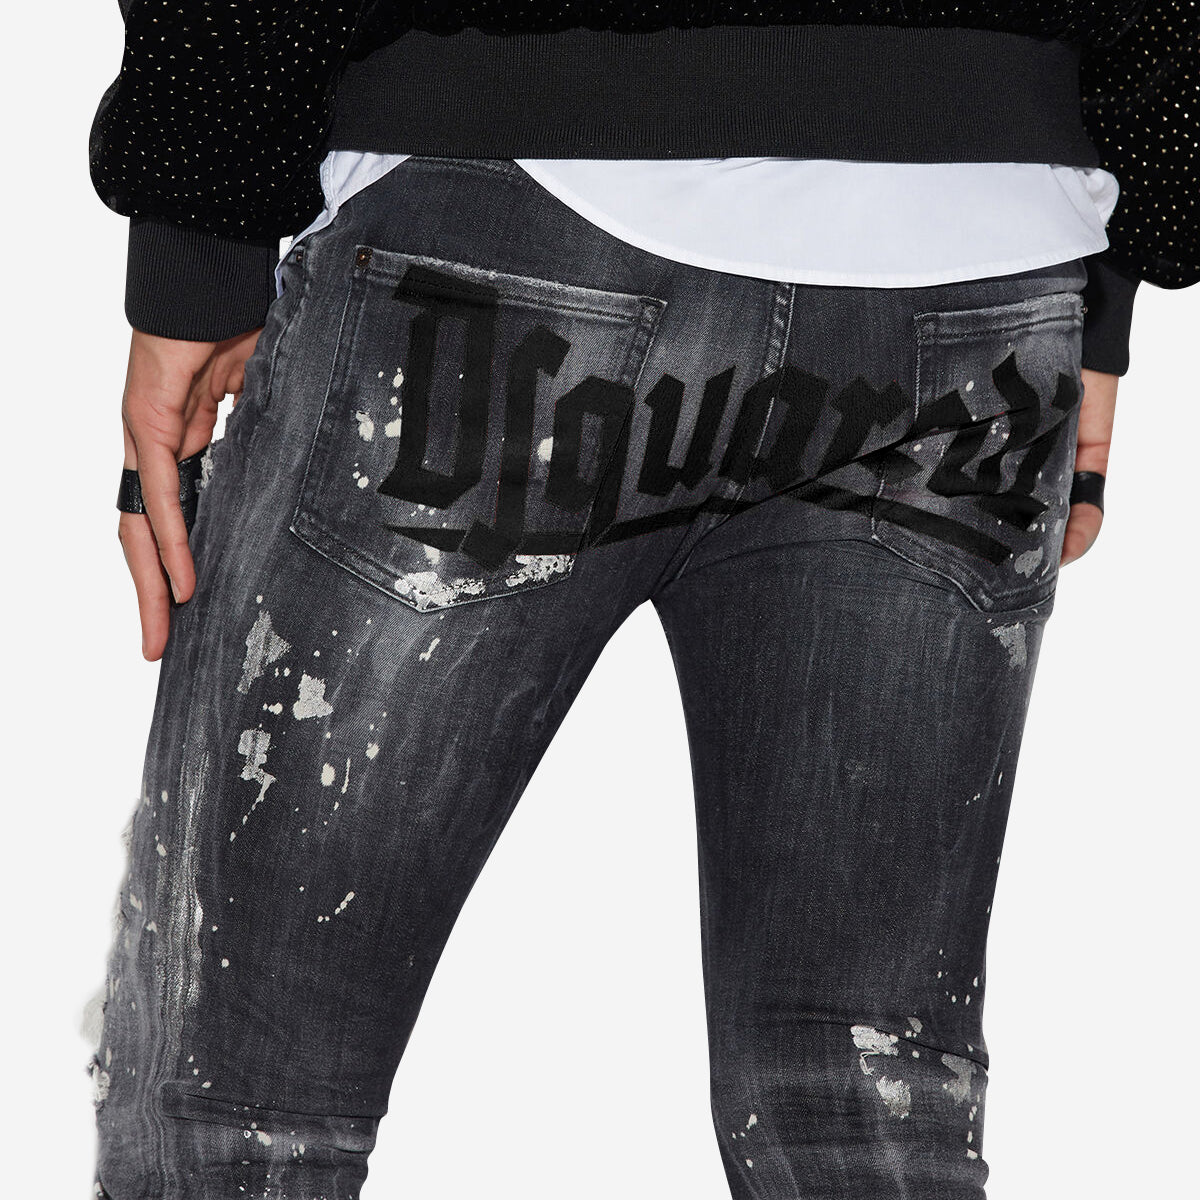 DSquared2 Black Wash Super Twinky Jeans